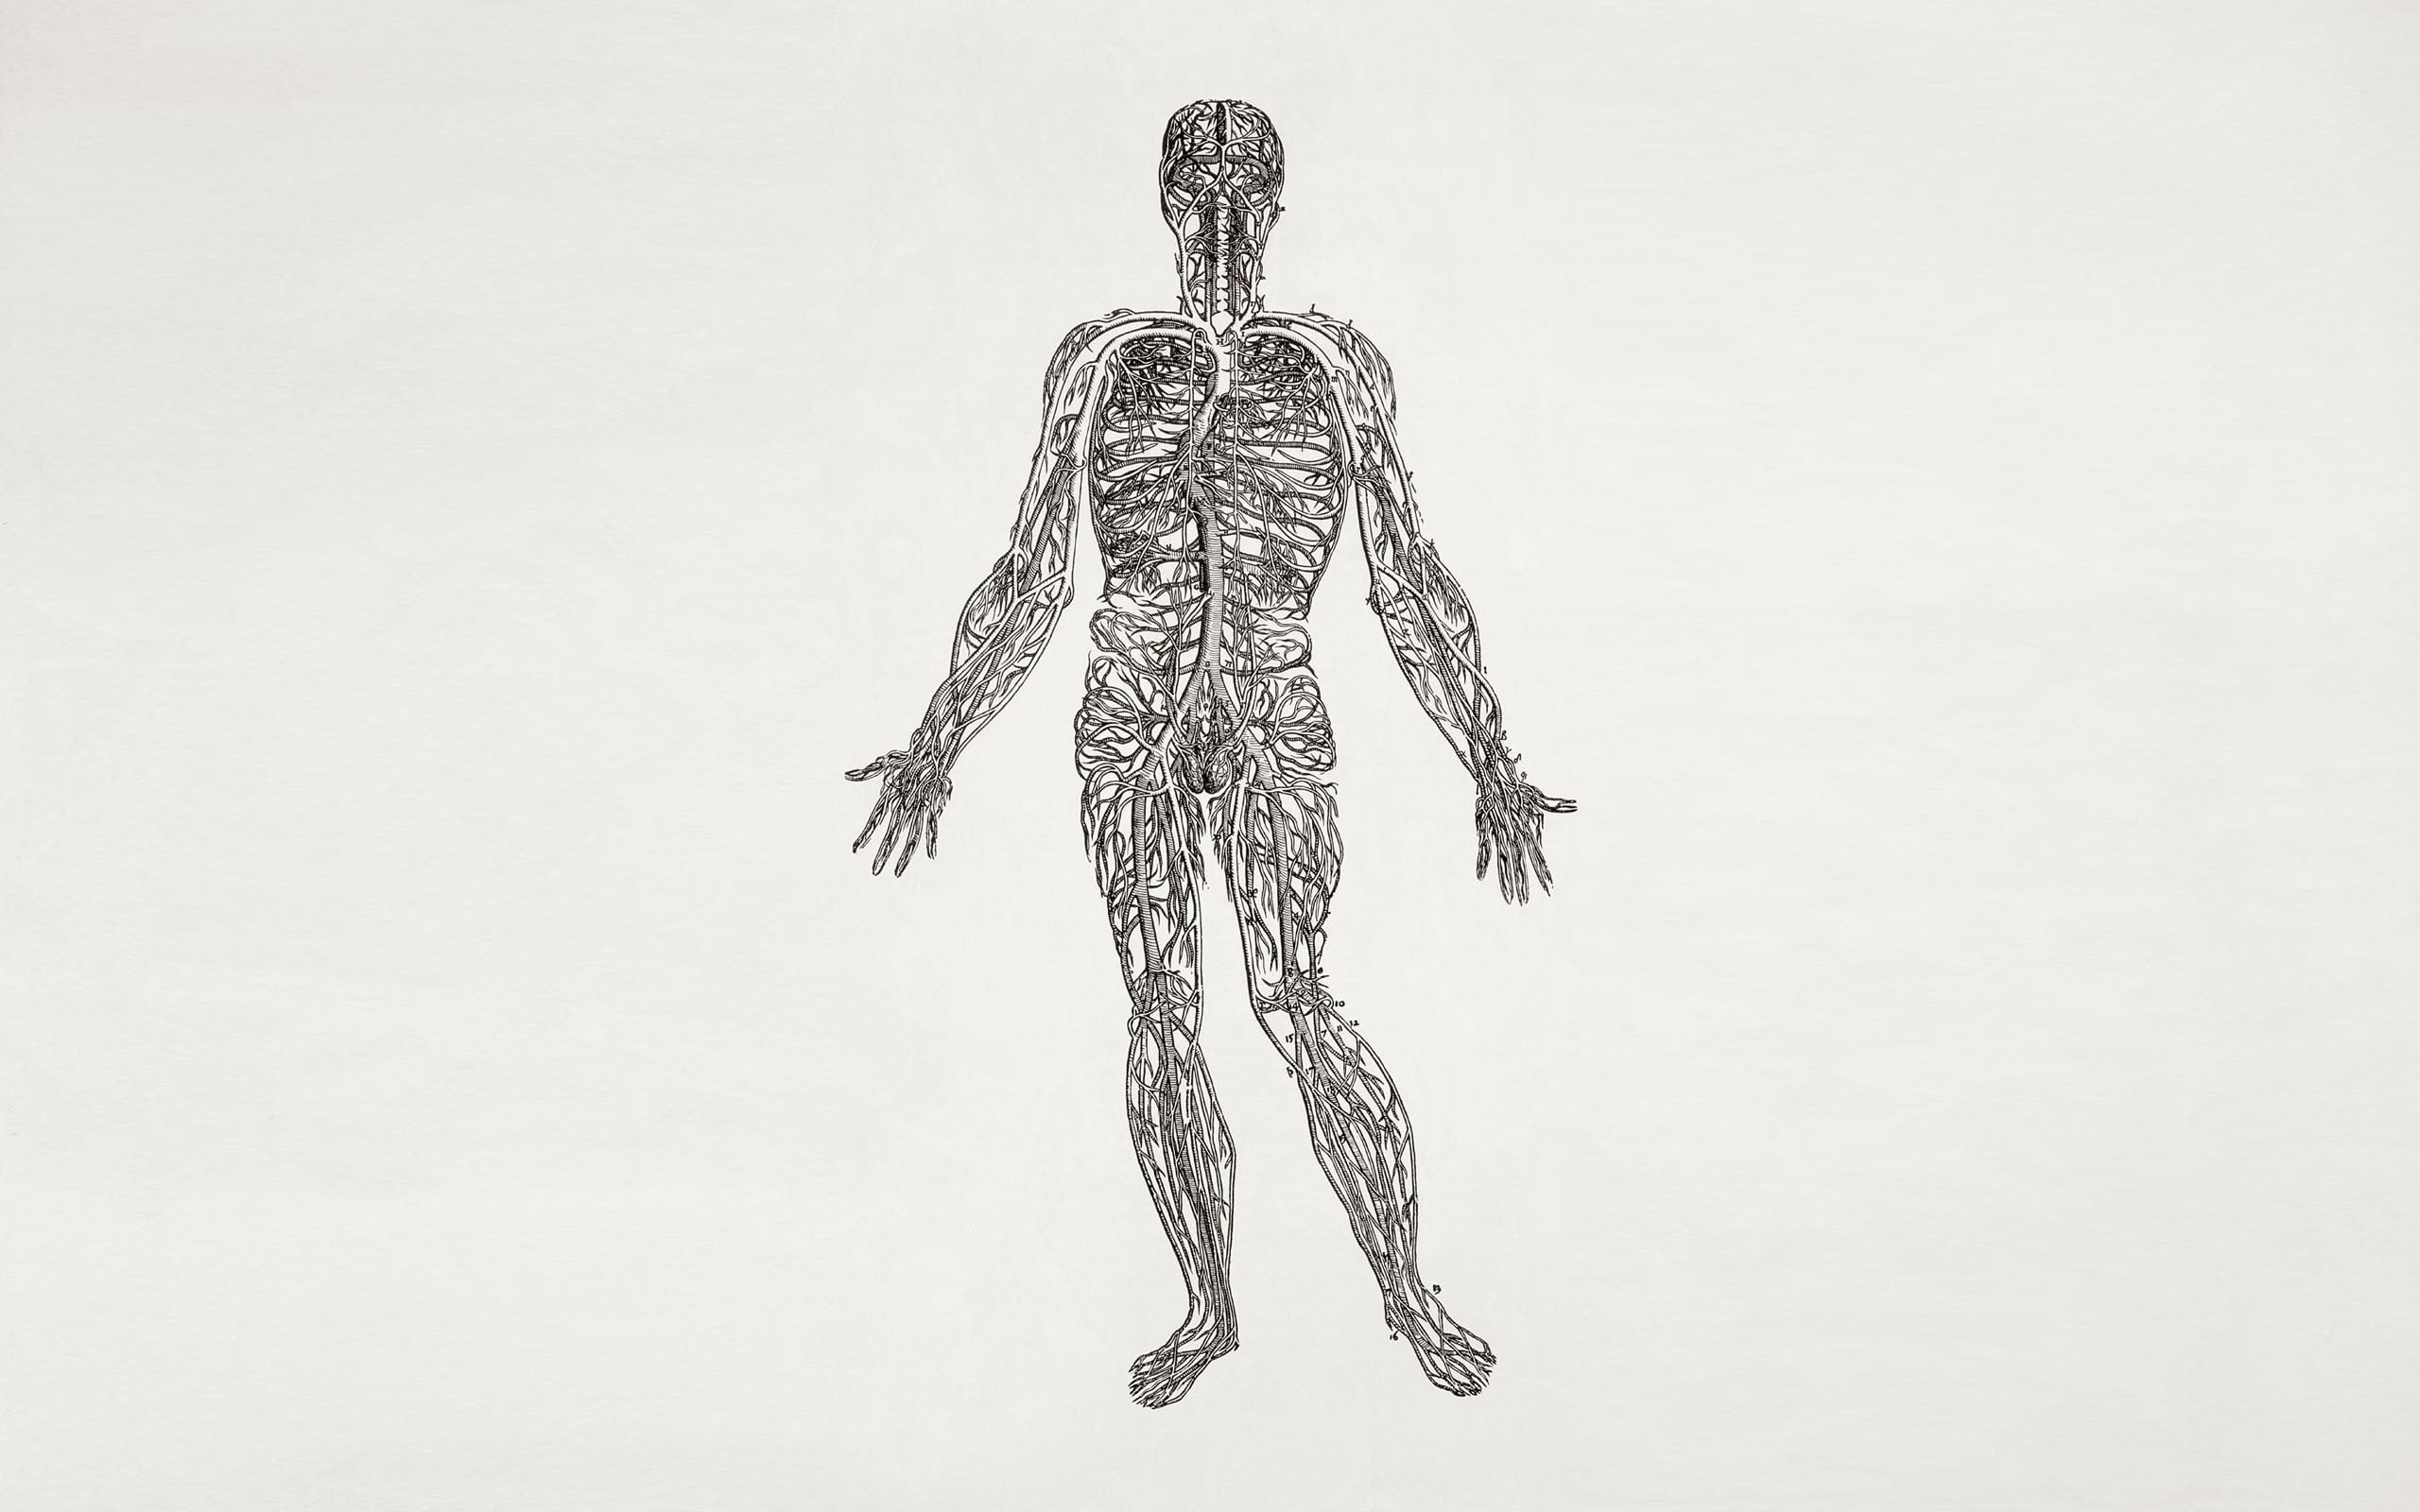 An illustration of a human body - Anatomy